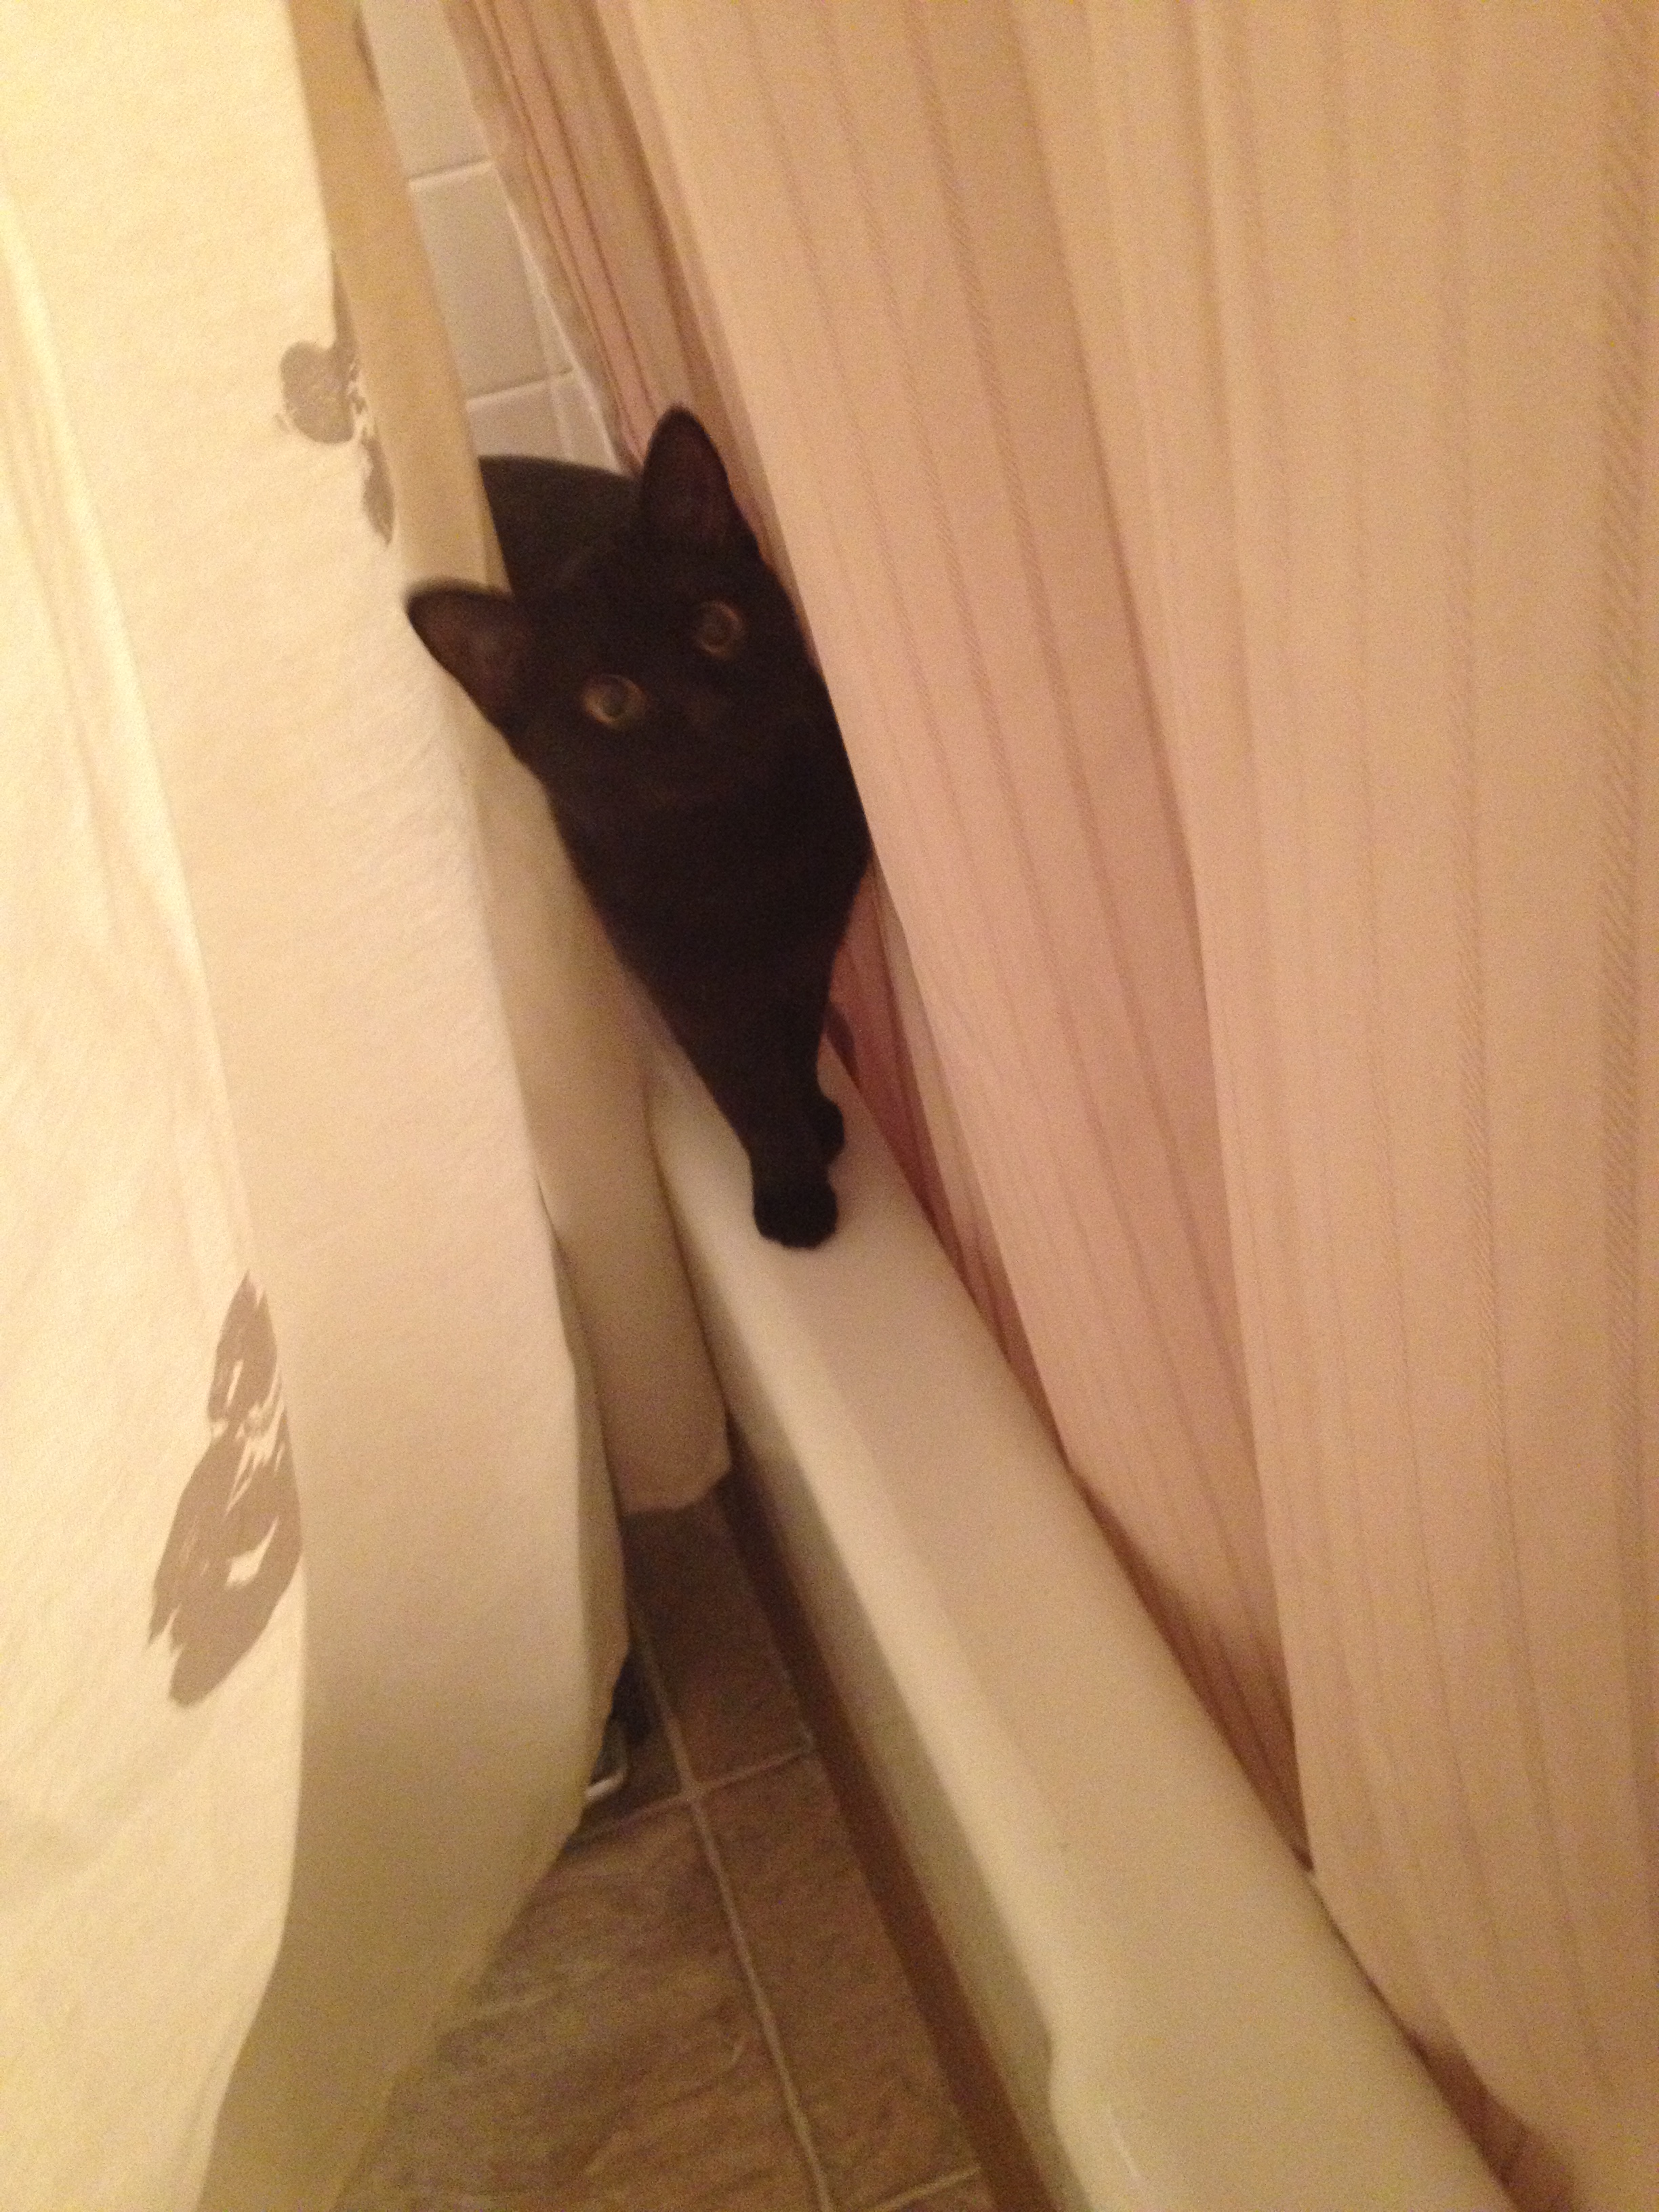 Nymeria exploring the shower...